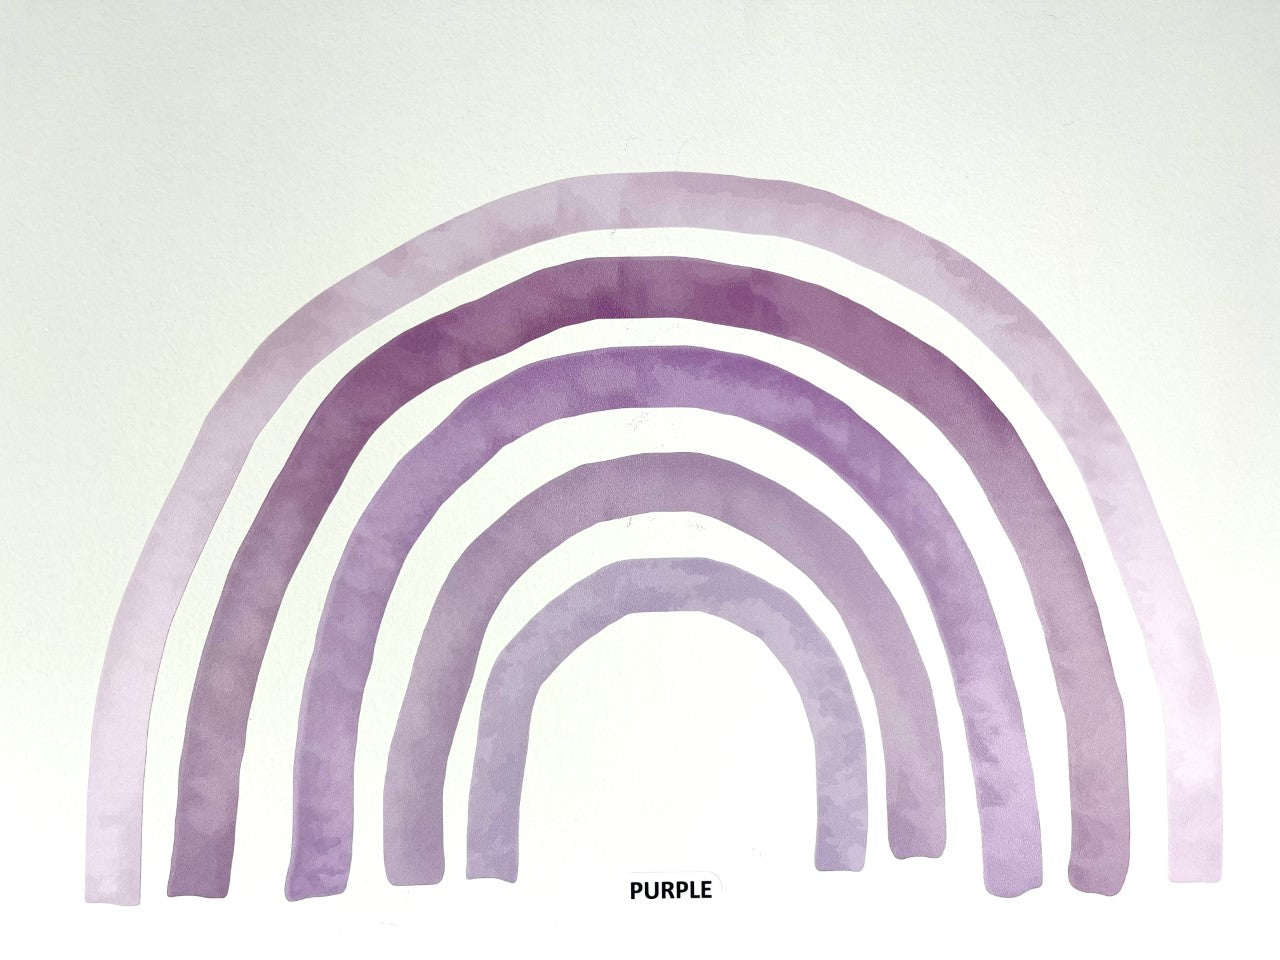 Swatch image of Purple rainbow